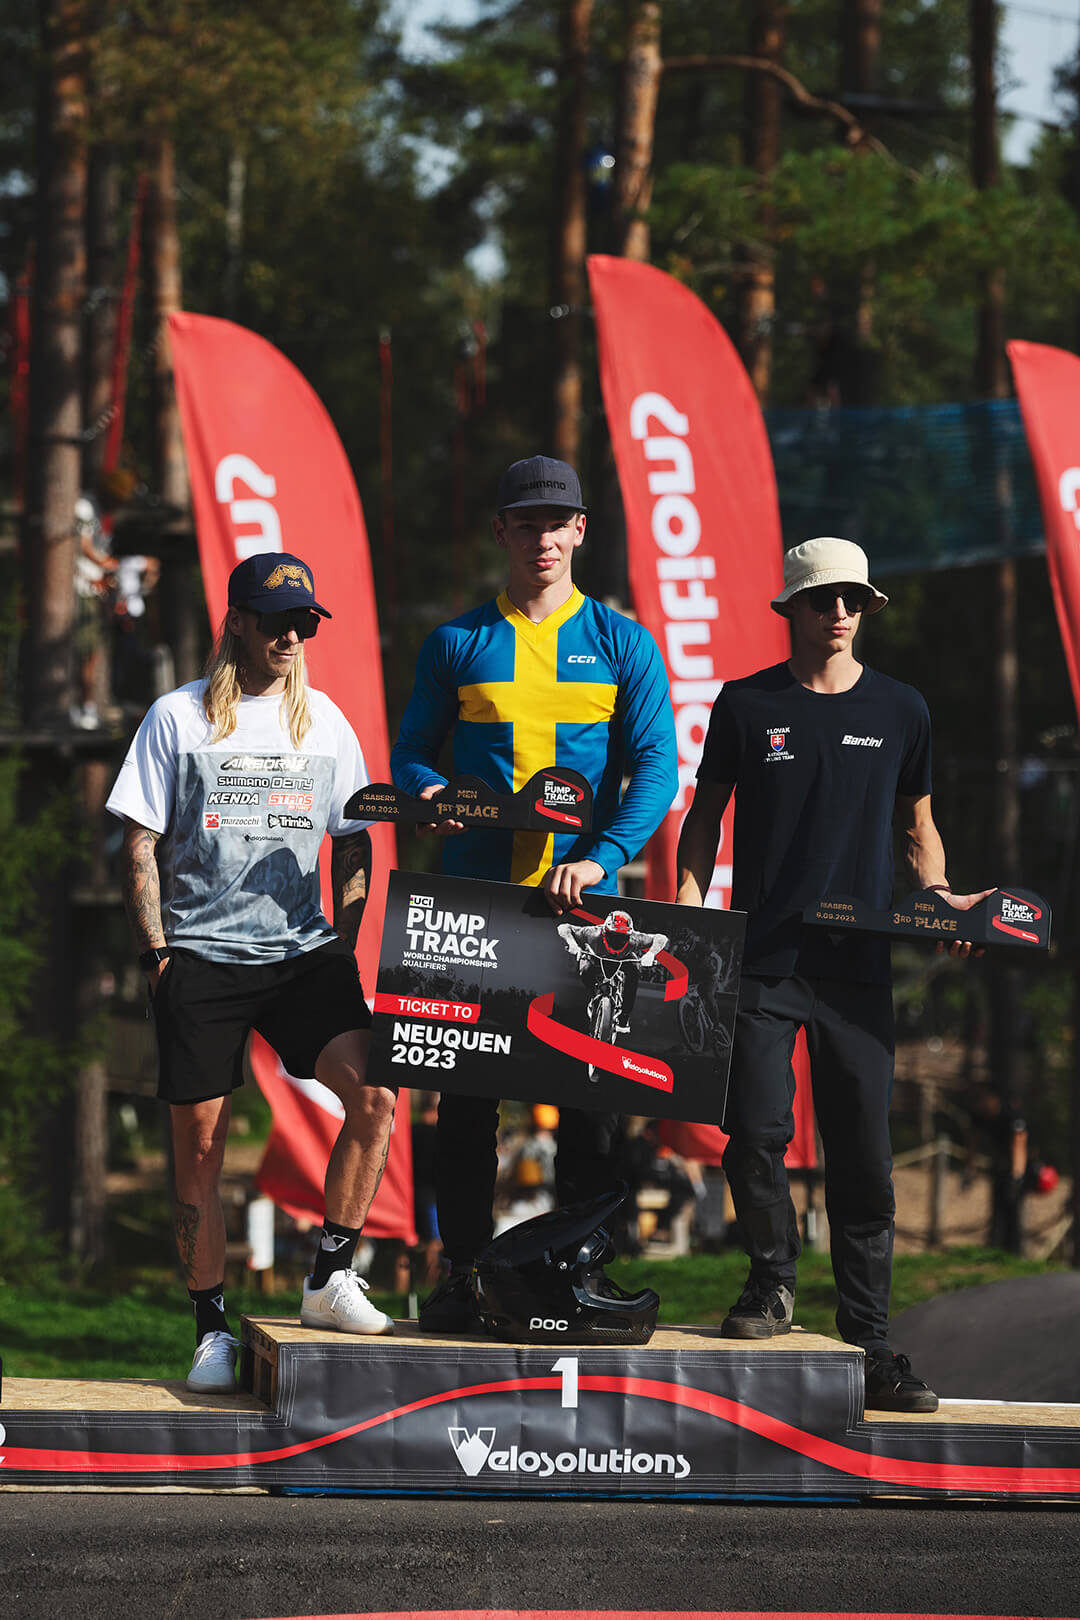 Velosolutions UCI Pump Track Worlds Qualifier Isaberg Sweden 7 - Berglund Photography